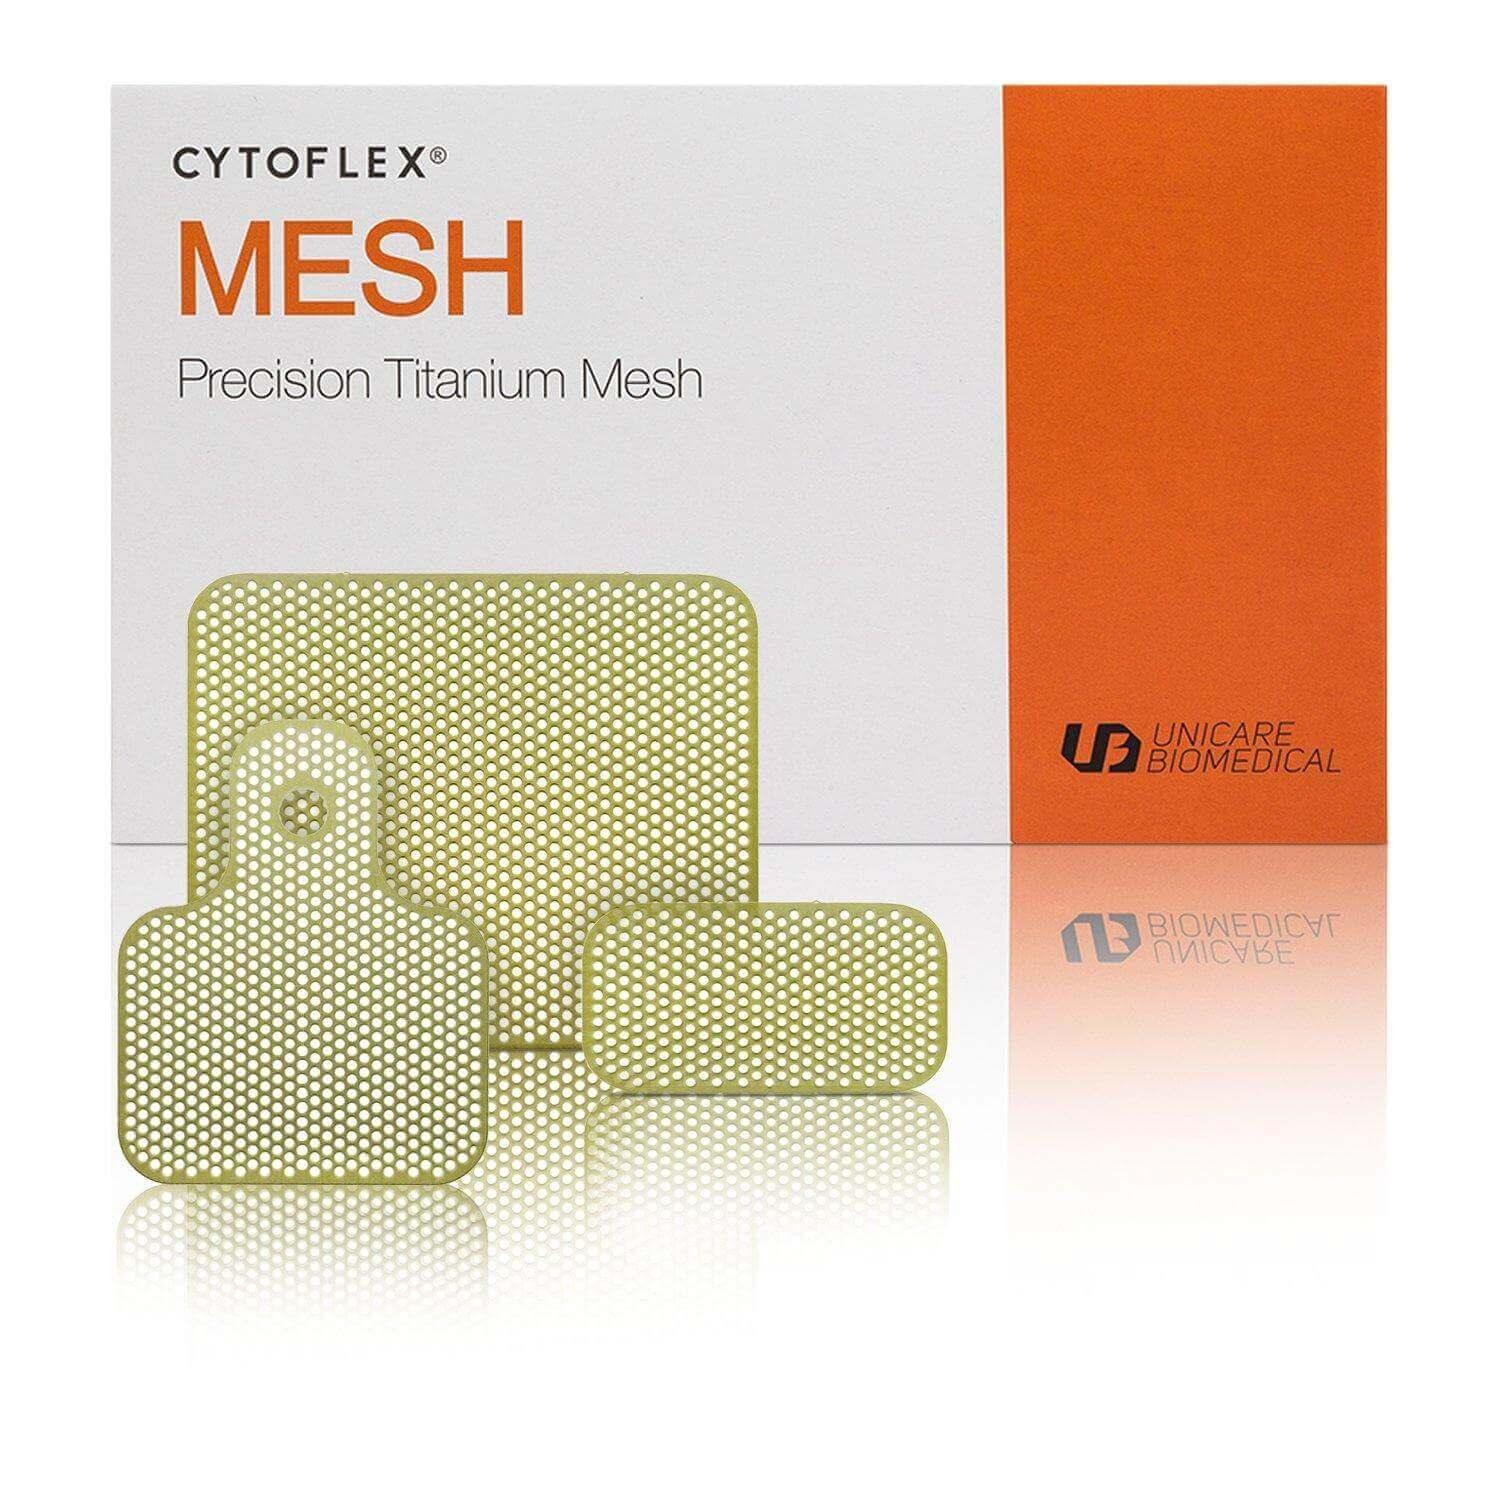 Cytoflex® Mesh - Precision Titanium Mesh - Unicare Biomedical Inc.